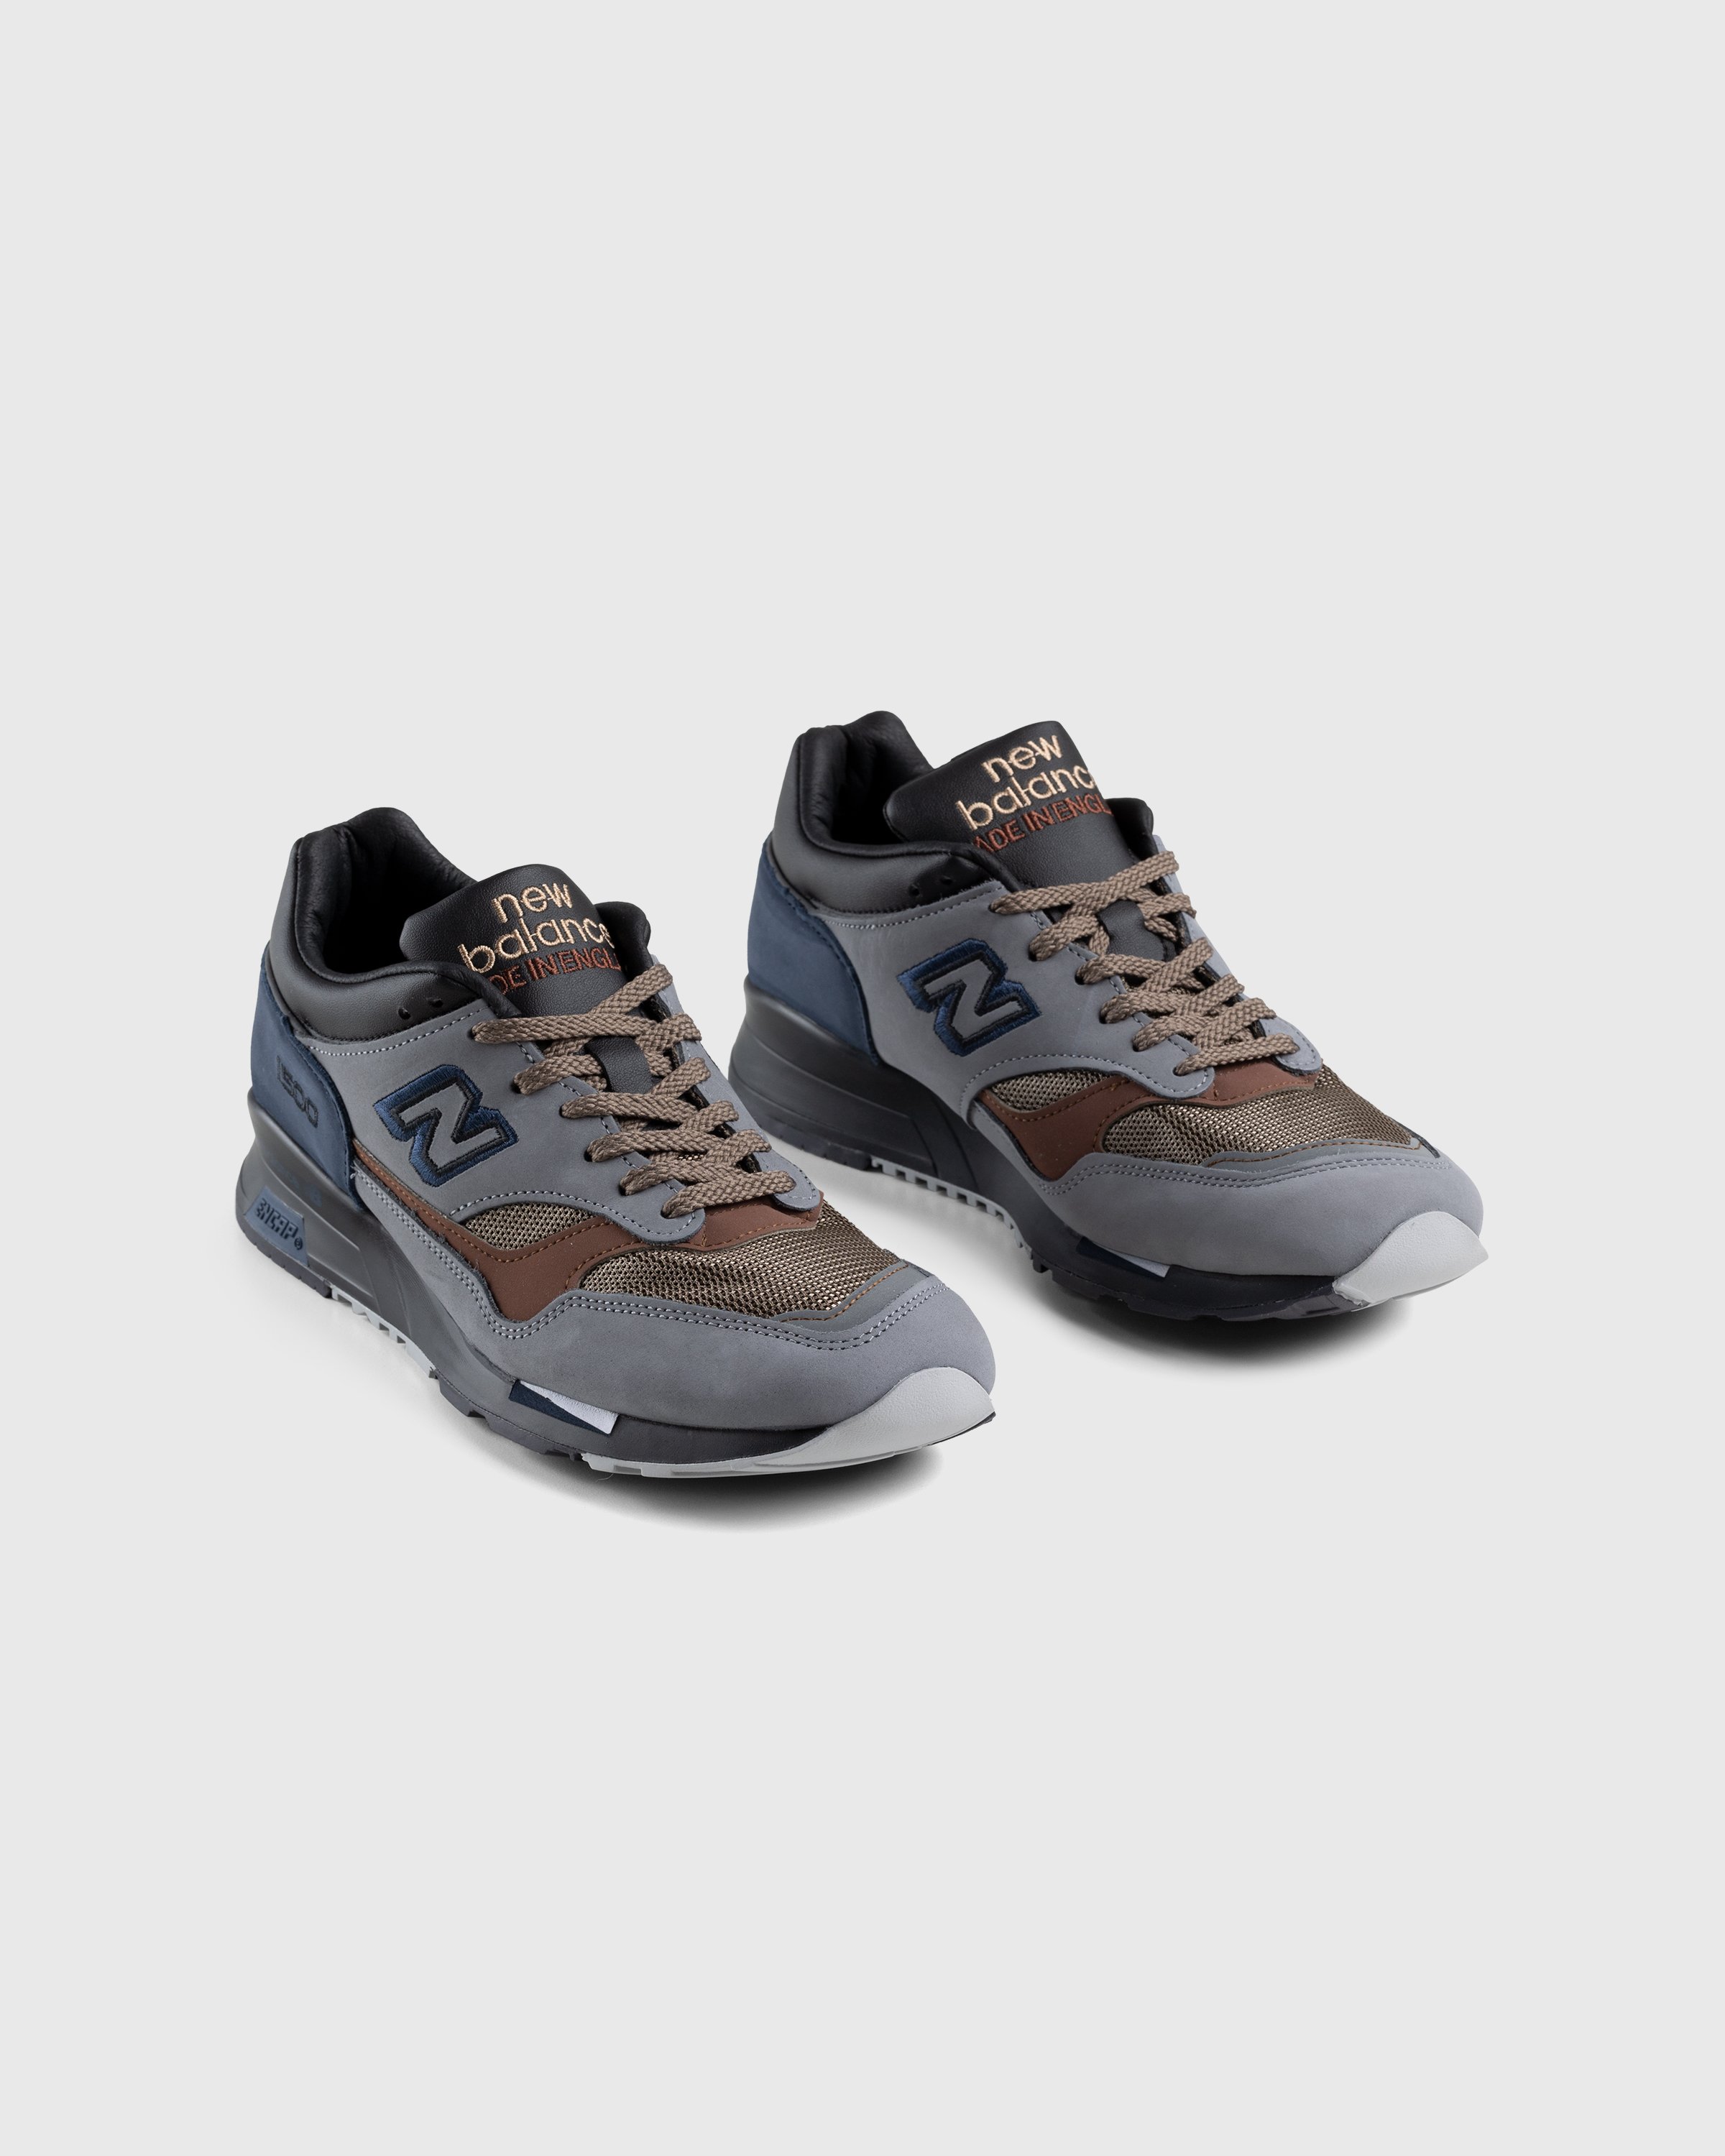 New Balance - M1500INV Grey/Black - Footwear - Grey - Image 3